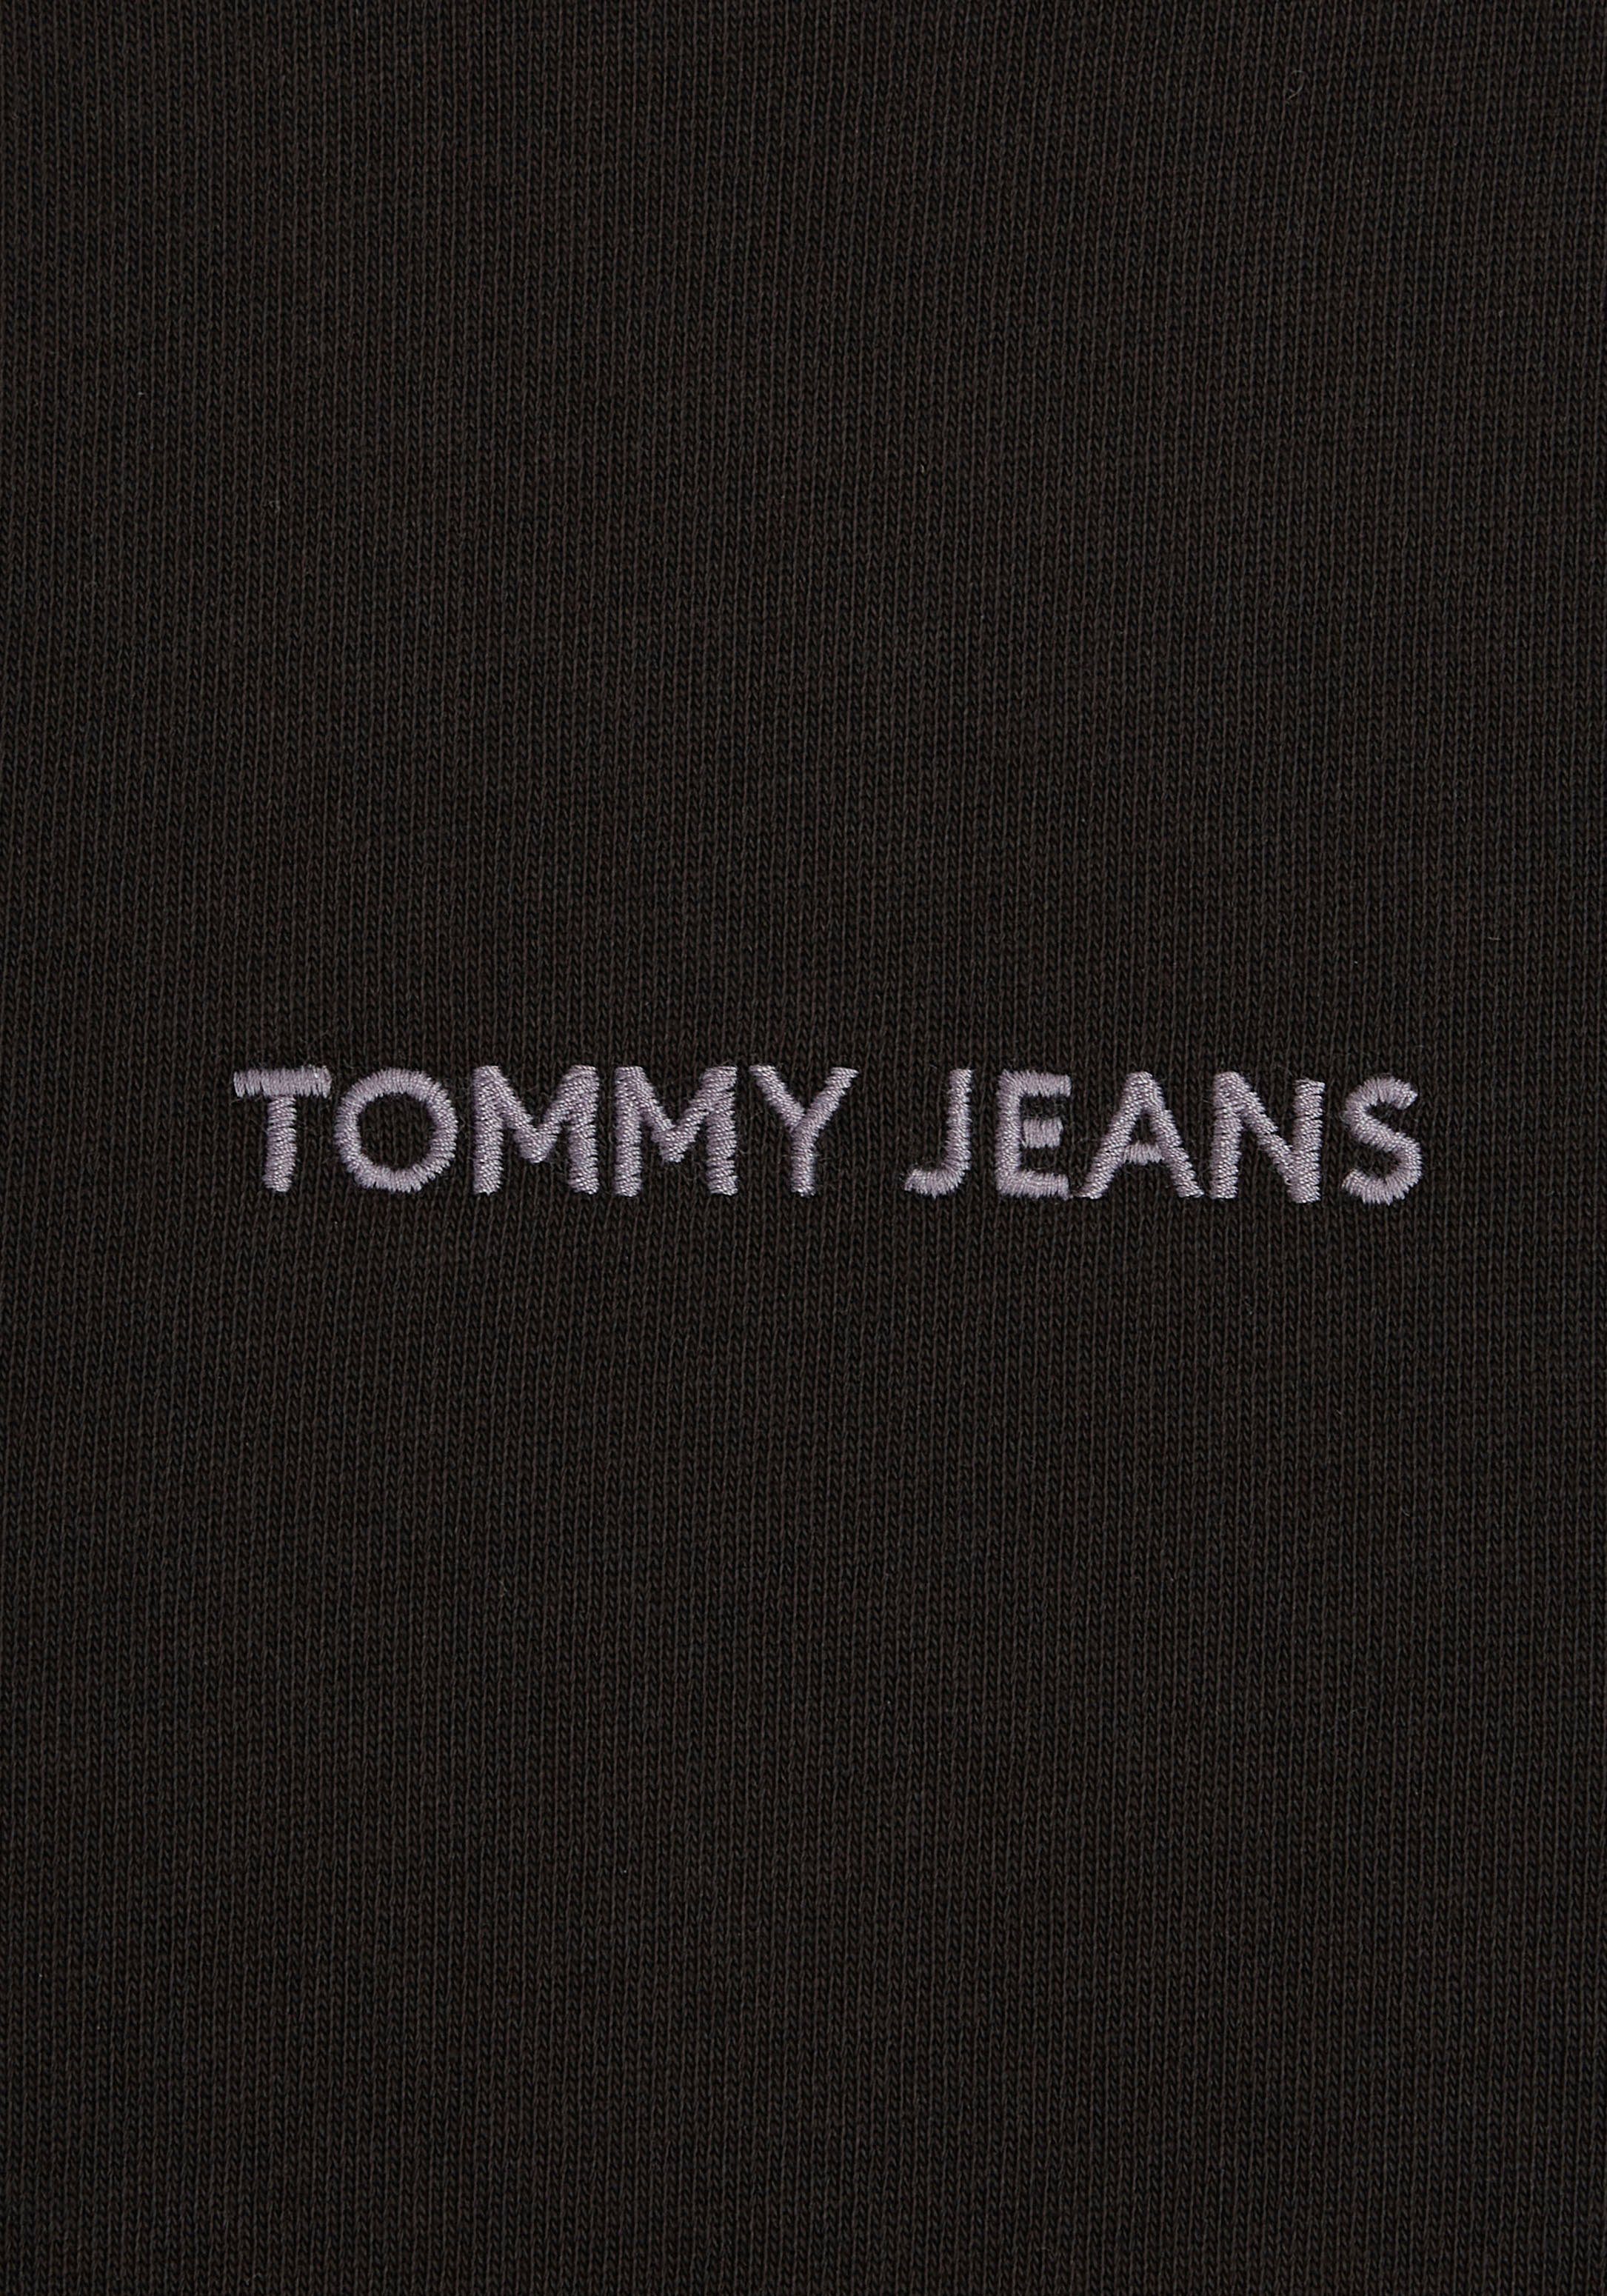 Tommy Jeans T-Shirt TJM REG TEE Black CLASSICS EXT NEW Rundhalsausschnitt S mit